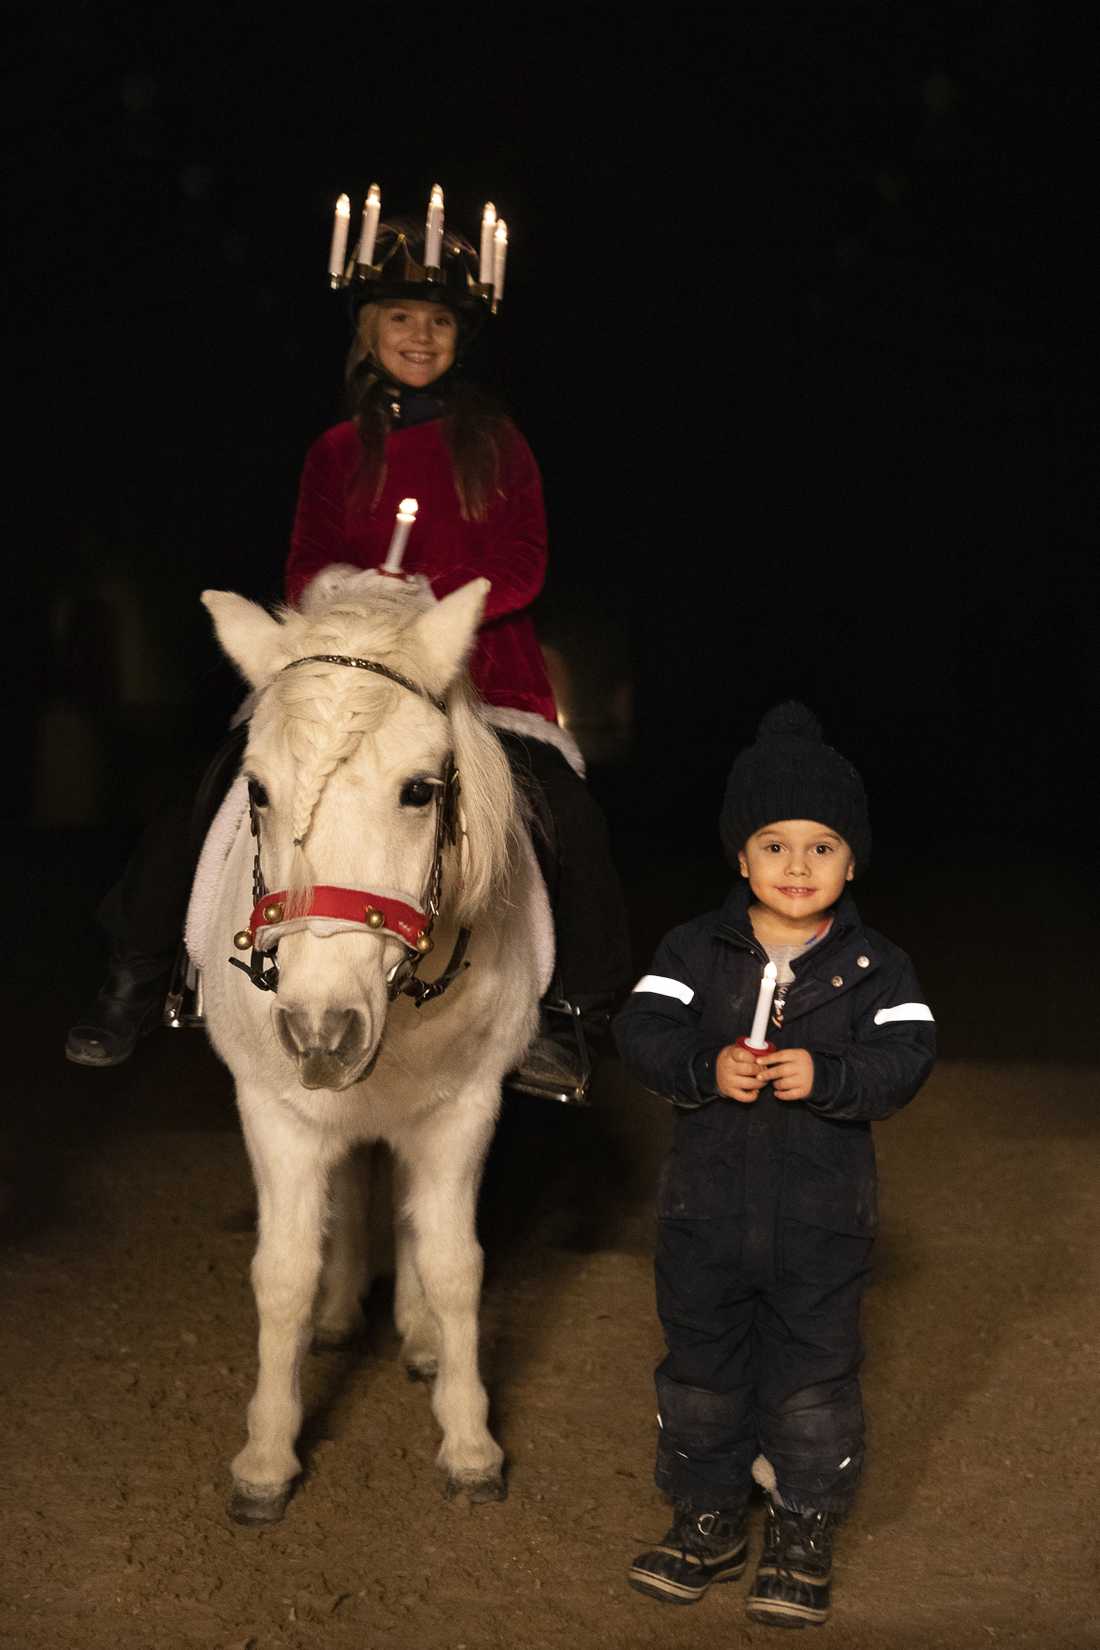 Prinsessan Estelle på sin ponny Viktor med lillebror Oscar